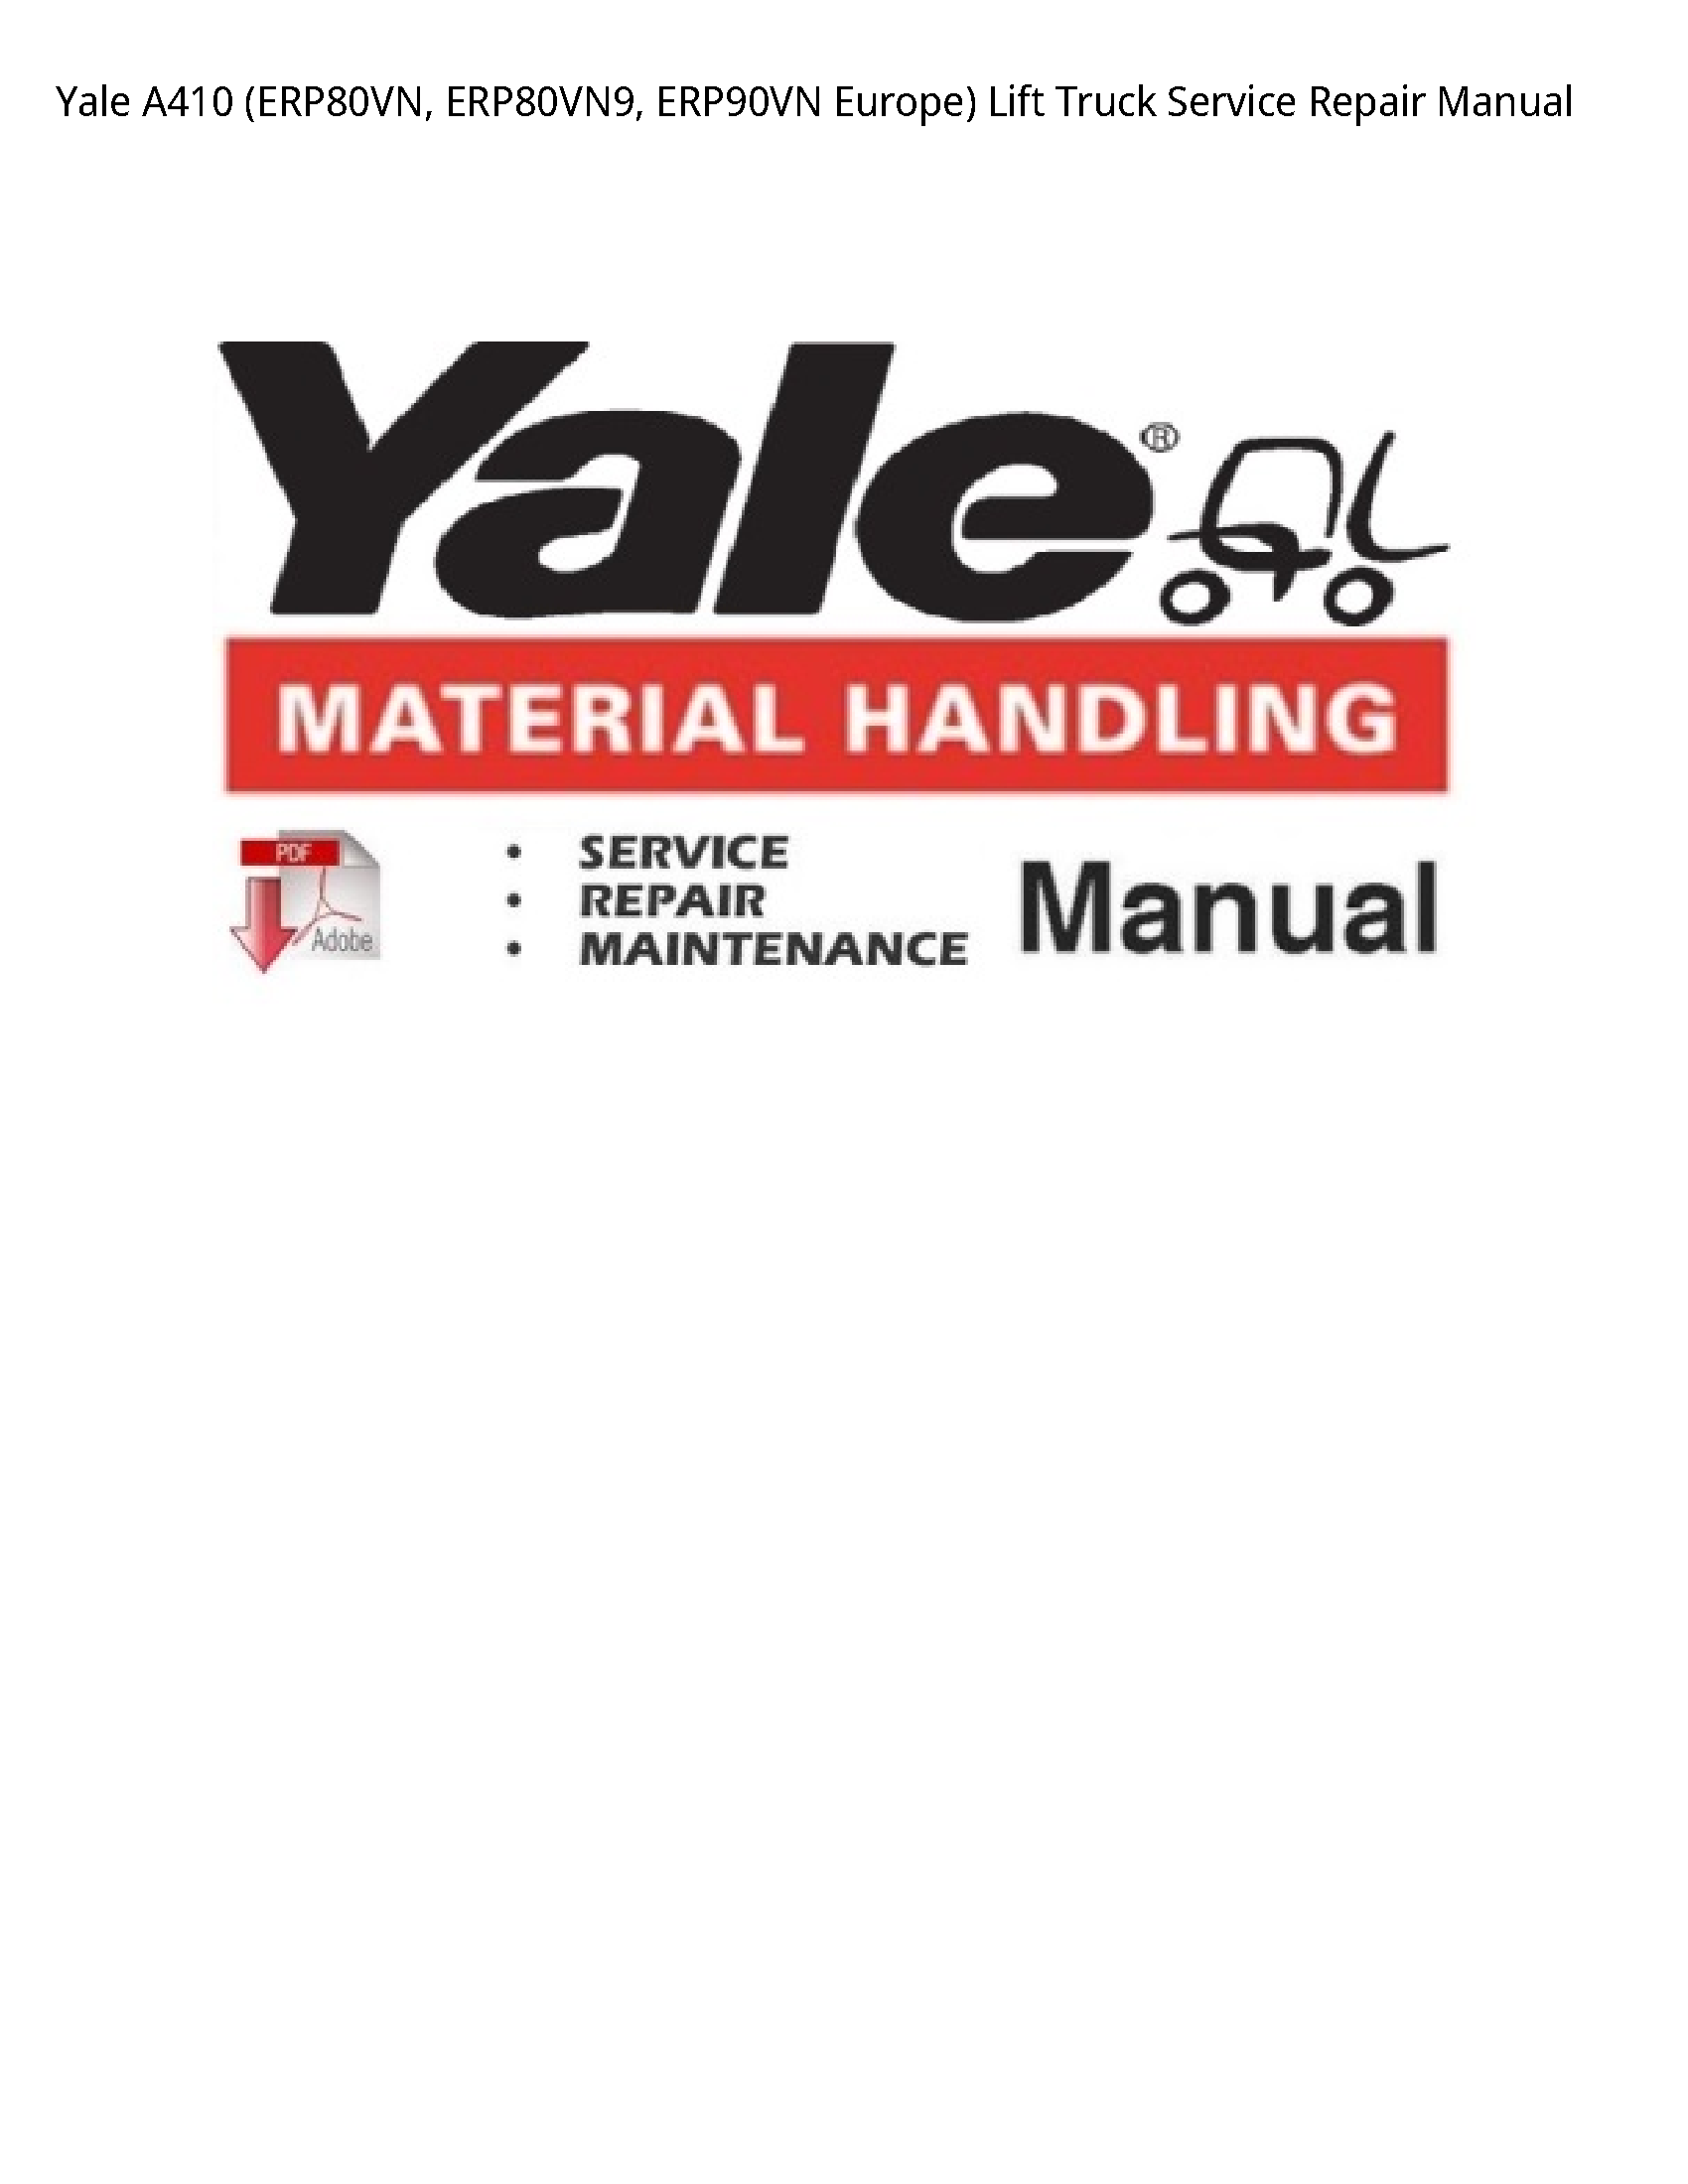 Yale A410 Europe) Lift Truck manual